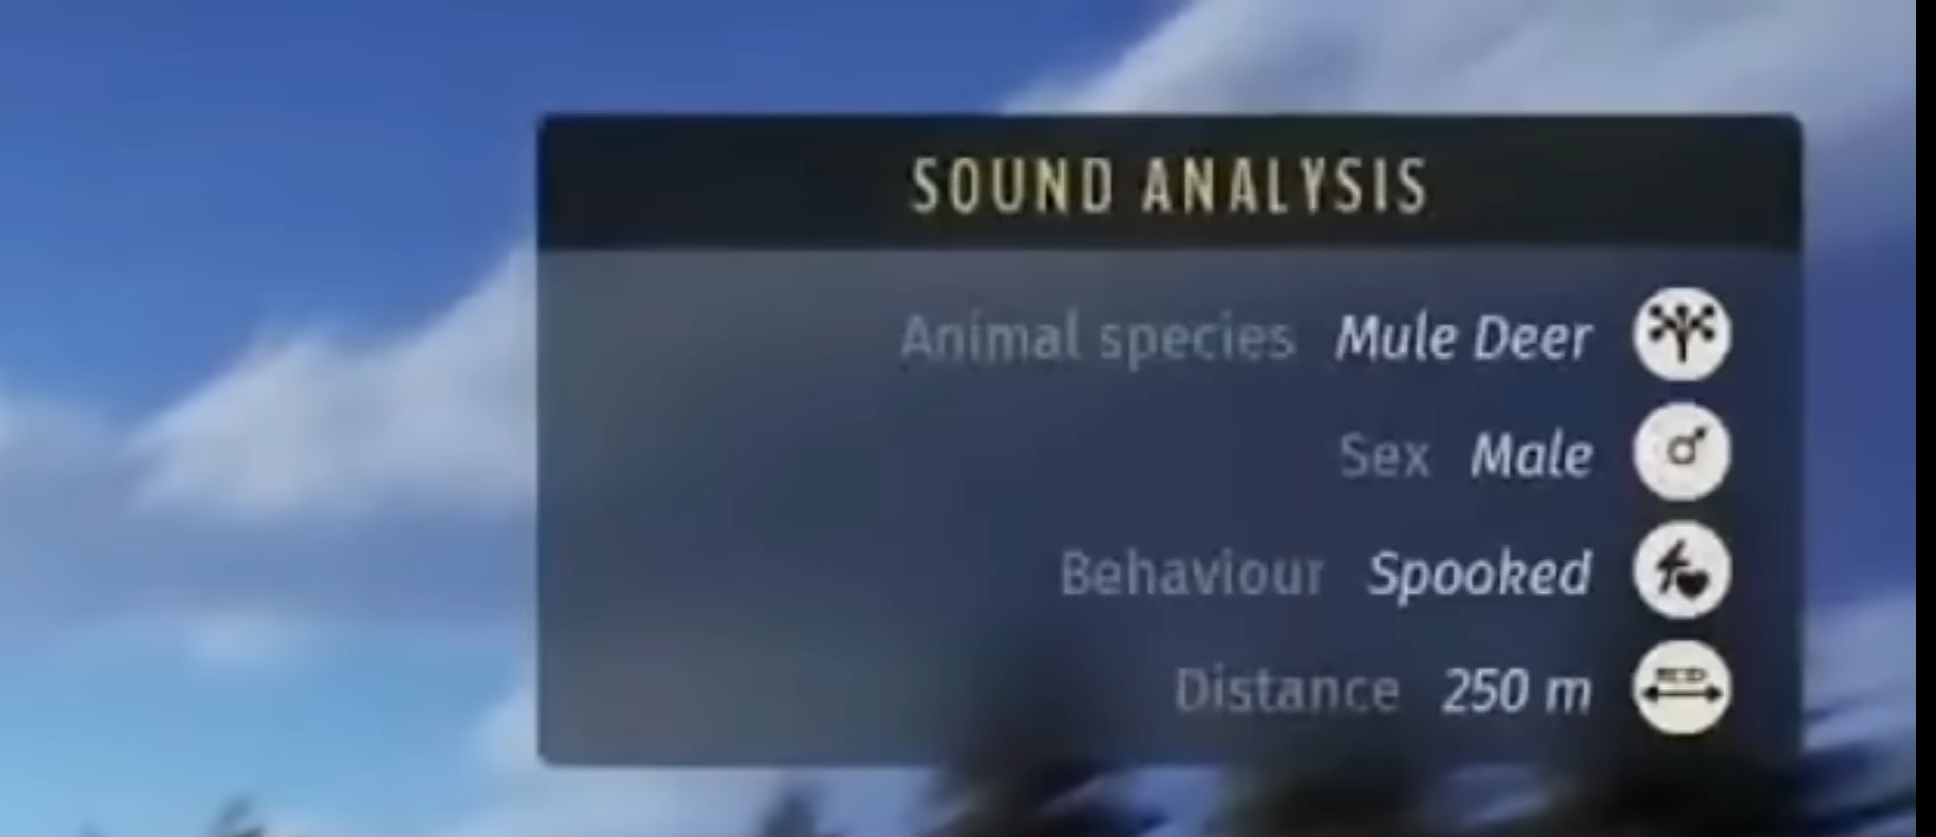 Analysis of Sound